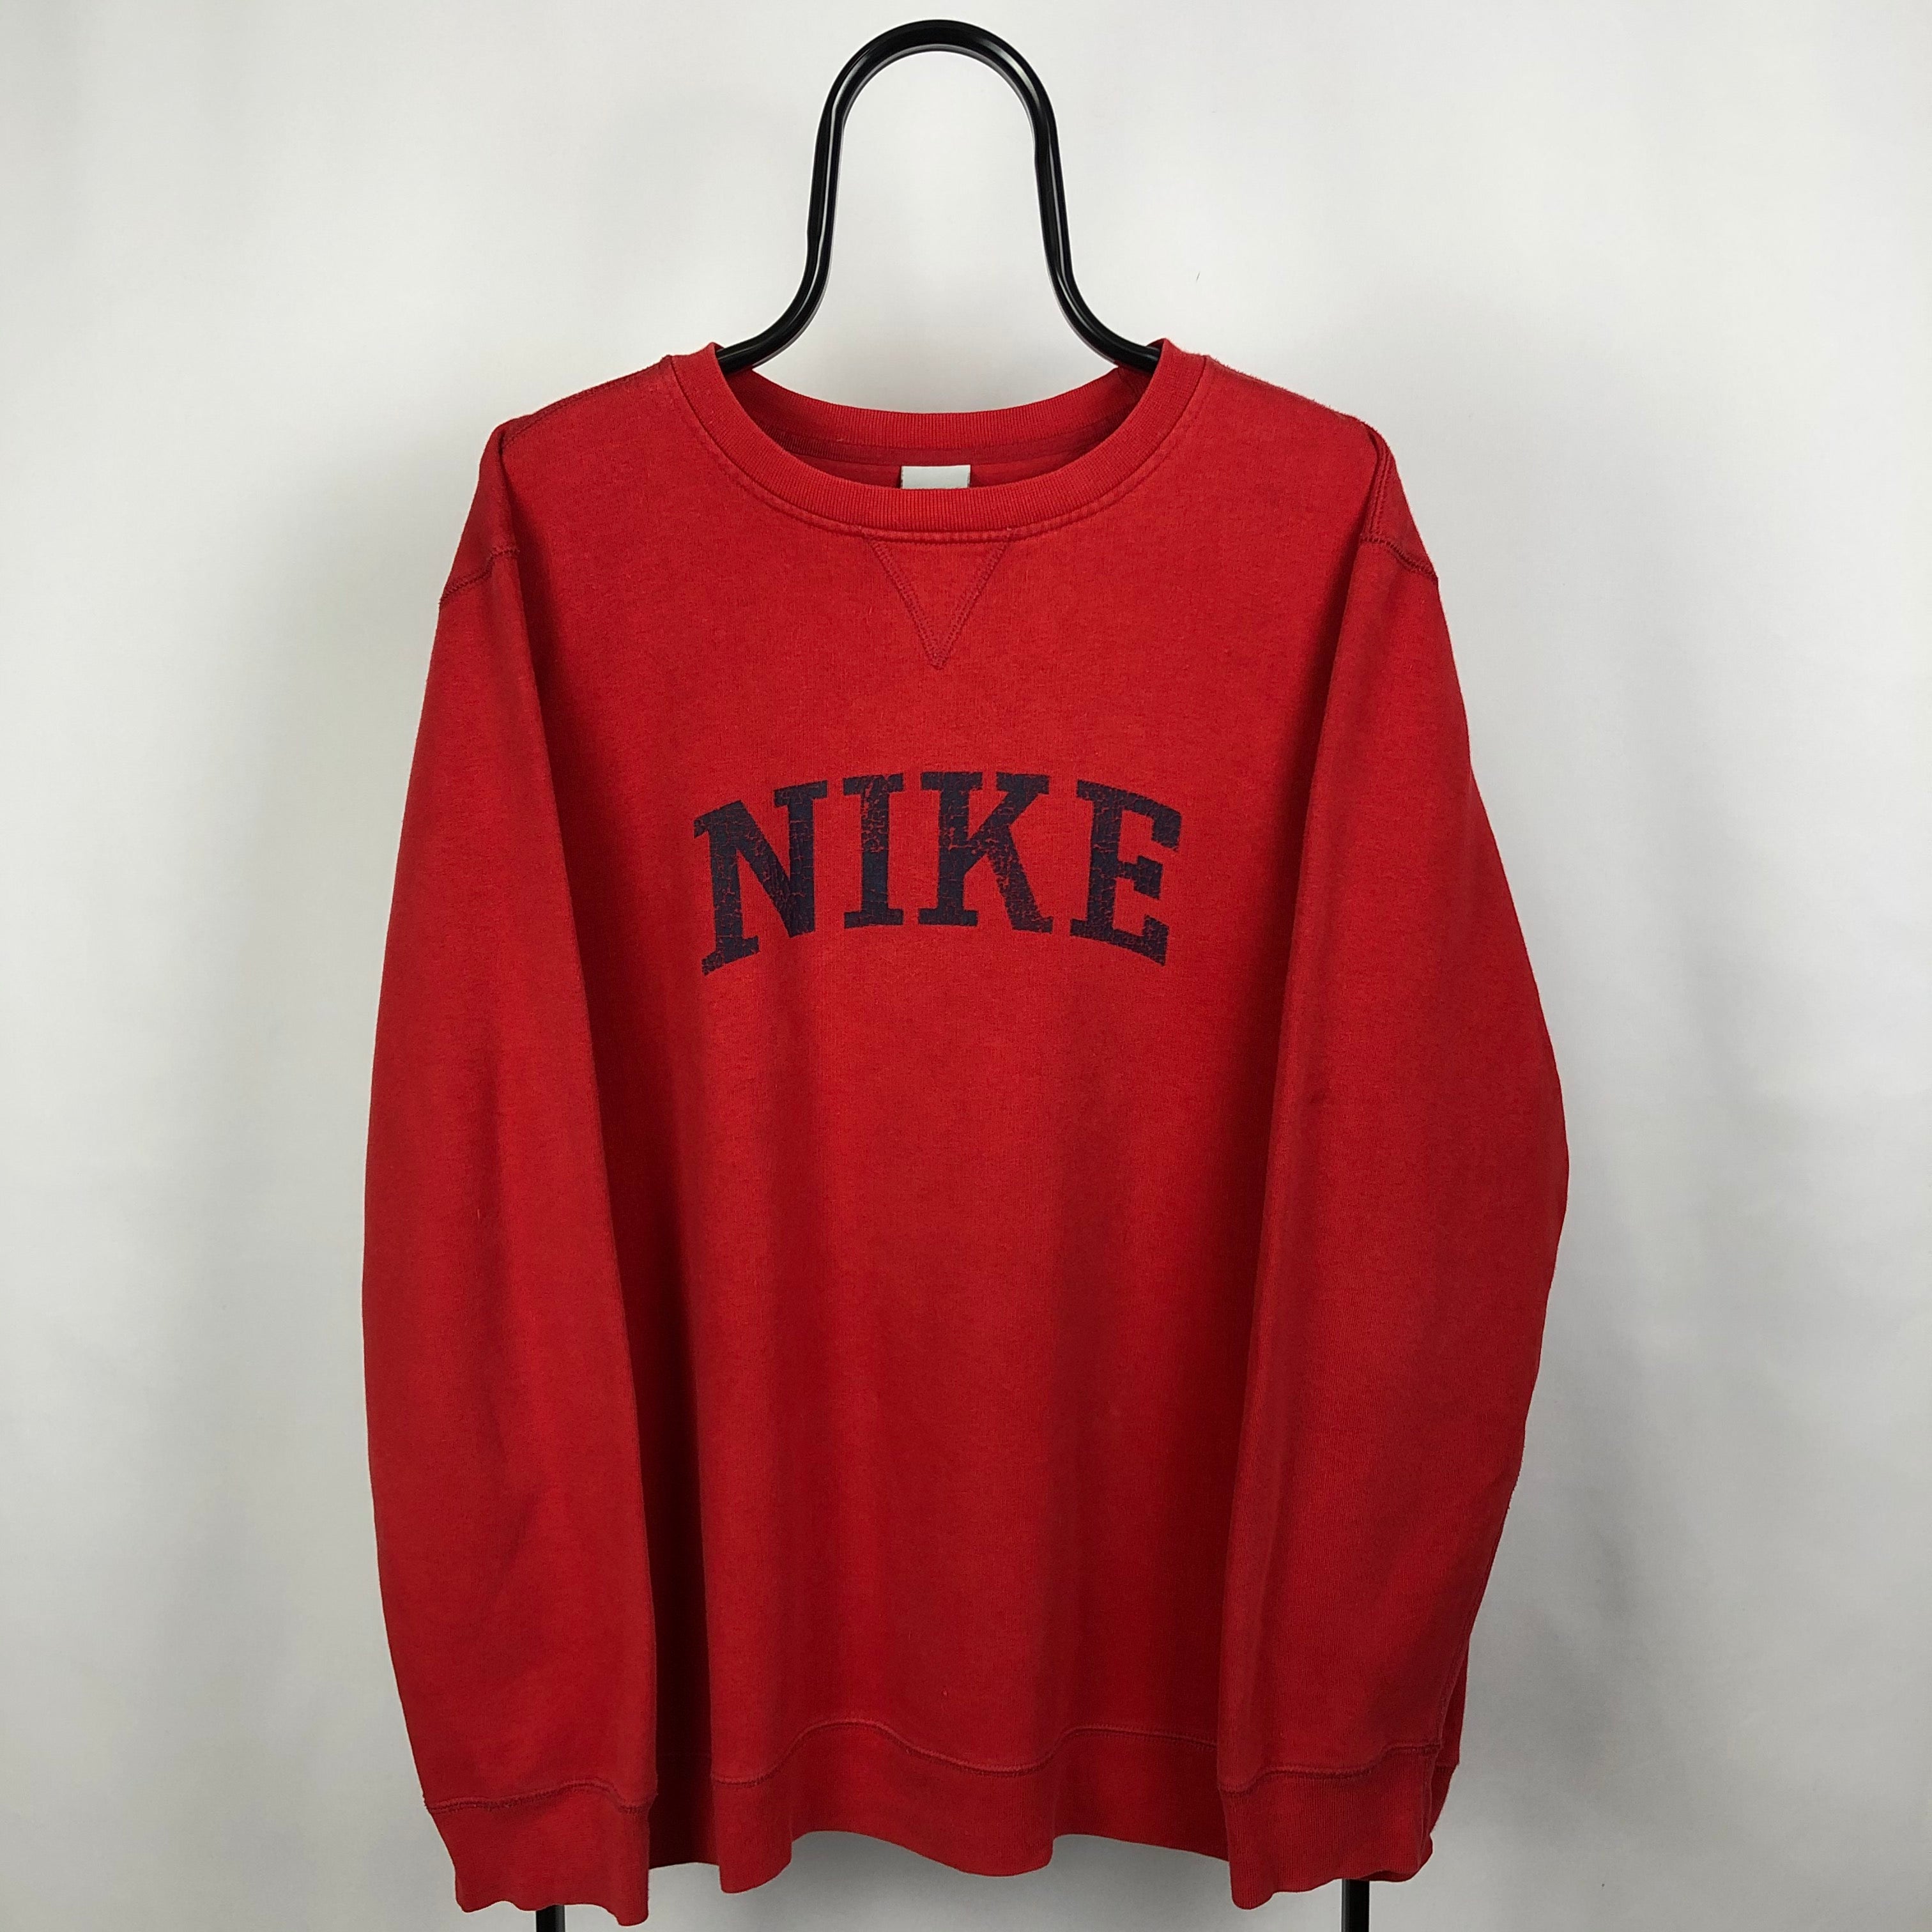 Vintage Nike Spellout Sweatshirt in Red - Men's Large/Women's XL ...